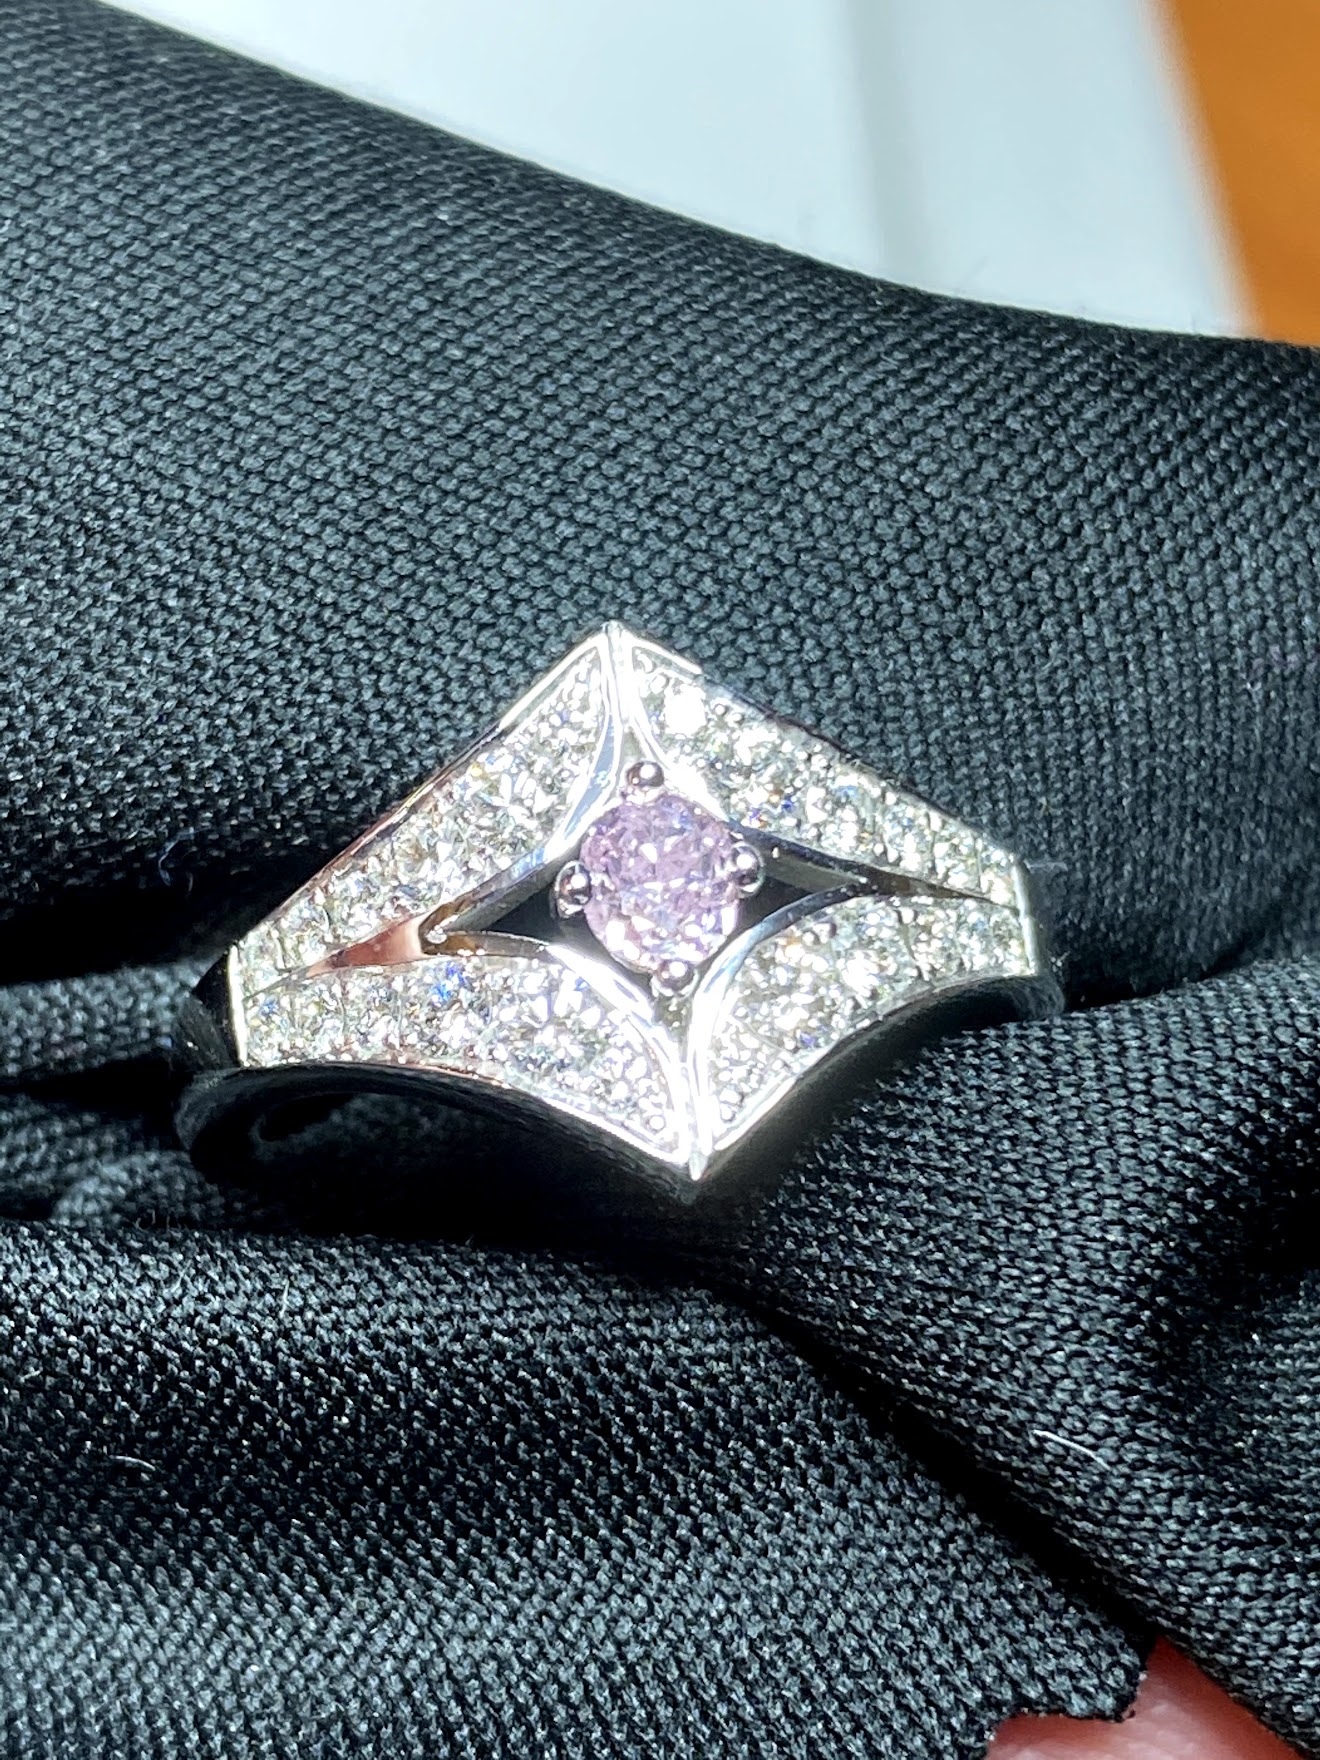 Lady’s 0.18ct Fancy Intense Purplish Pink Argyle Diamond Ring (0.62ct TW approximately)